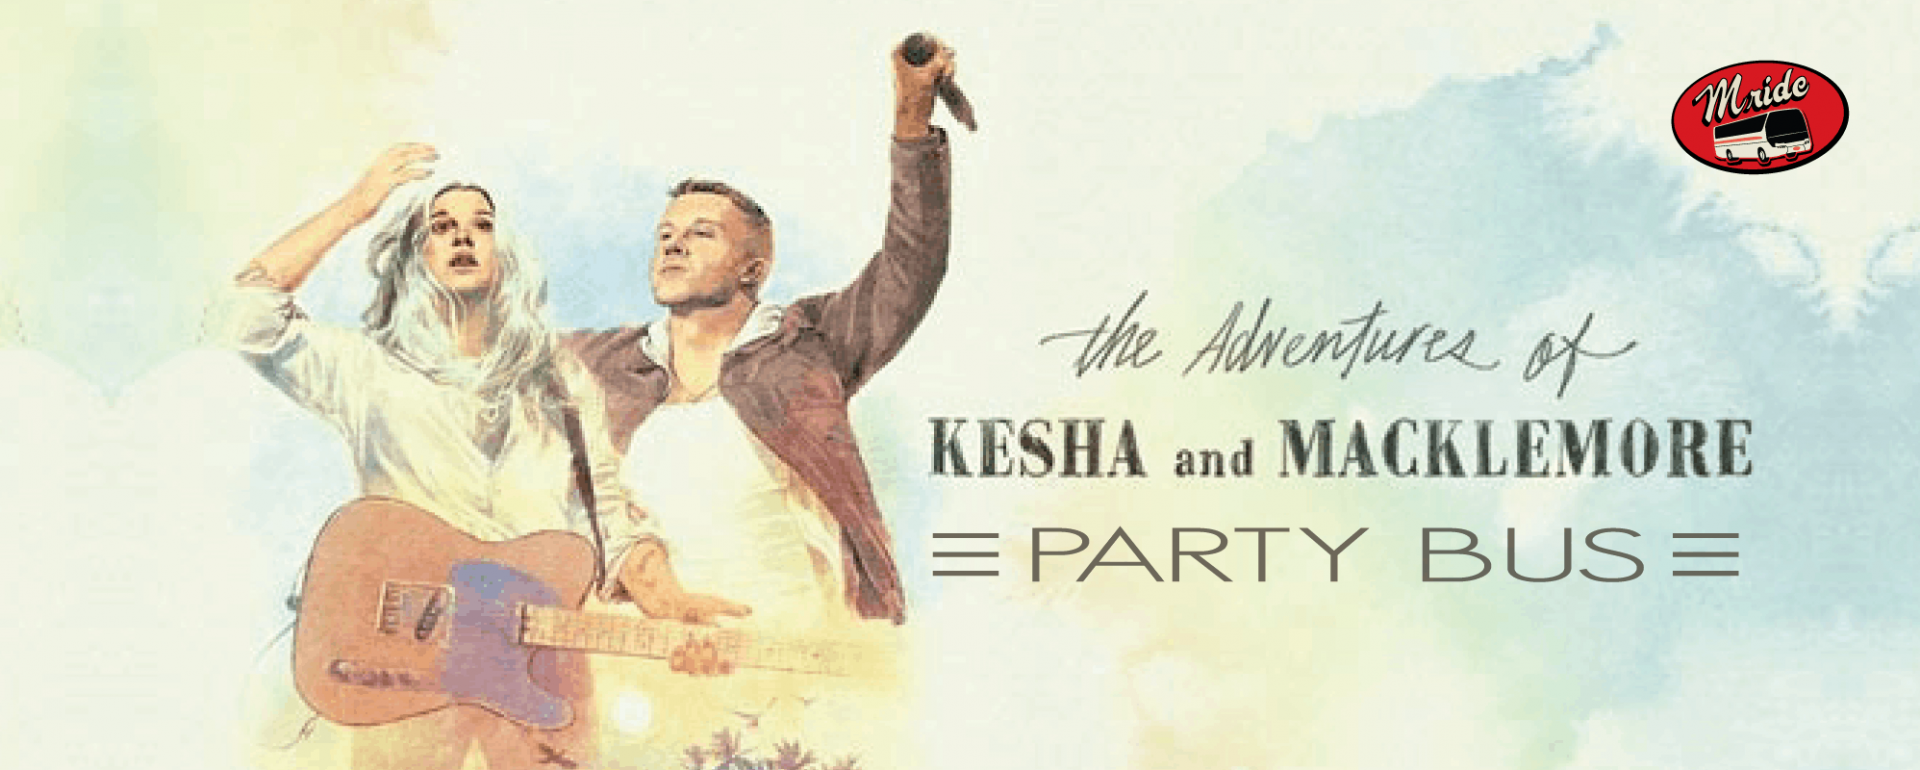 Kesha and Macklemore Party Bus